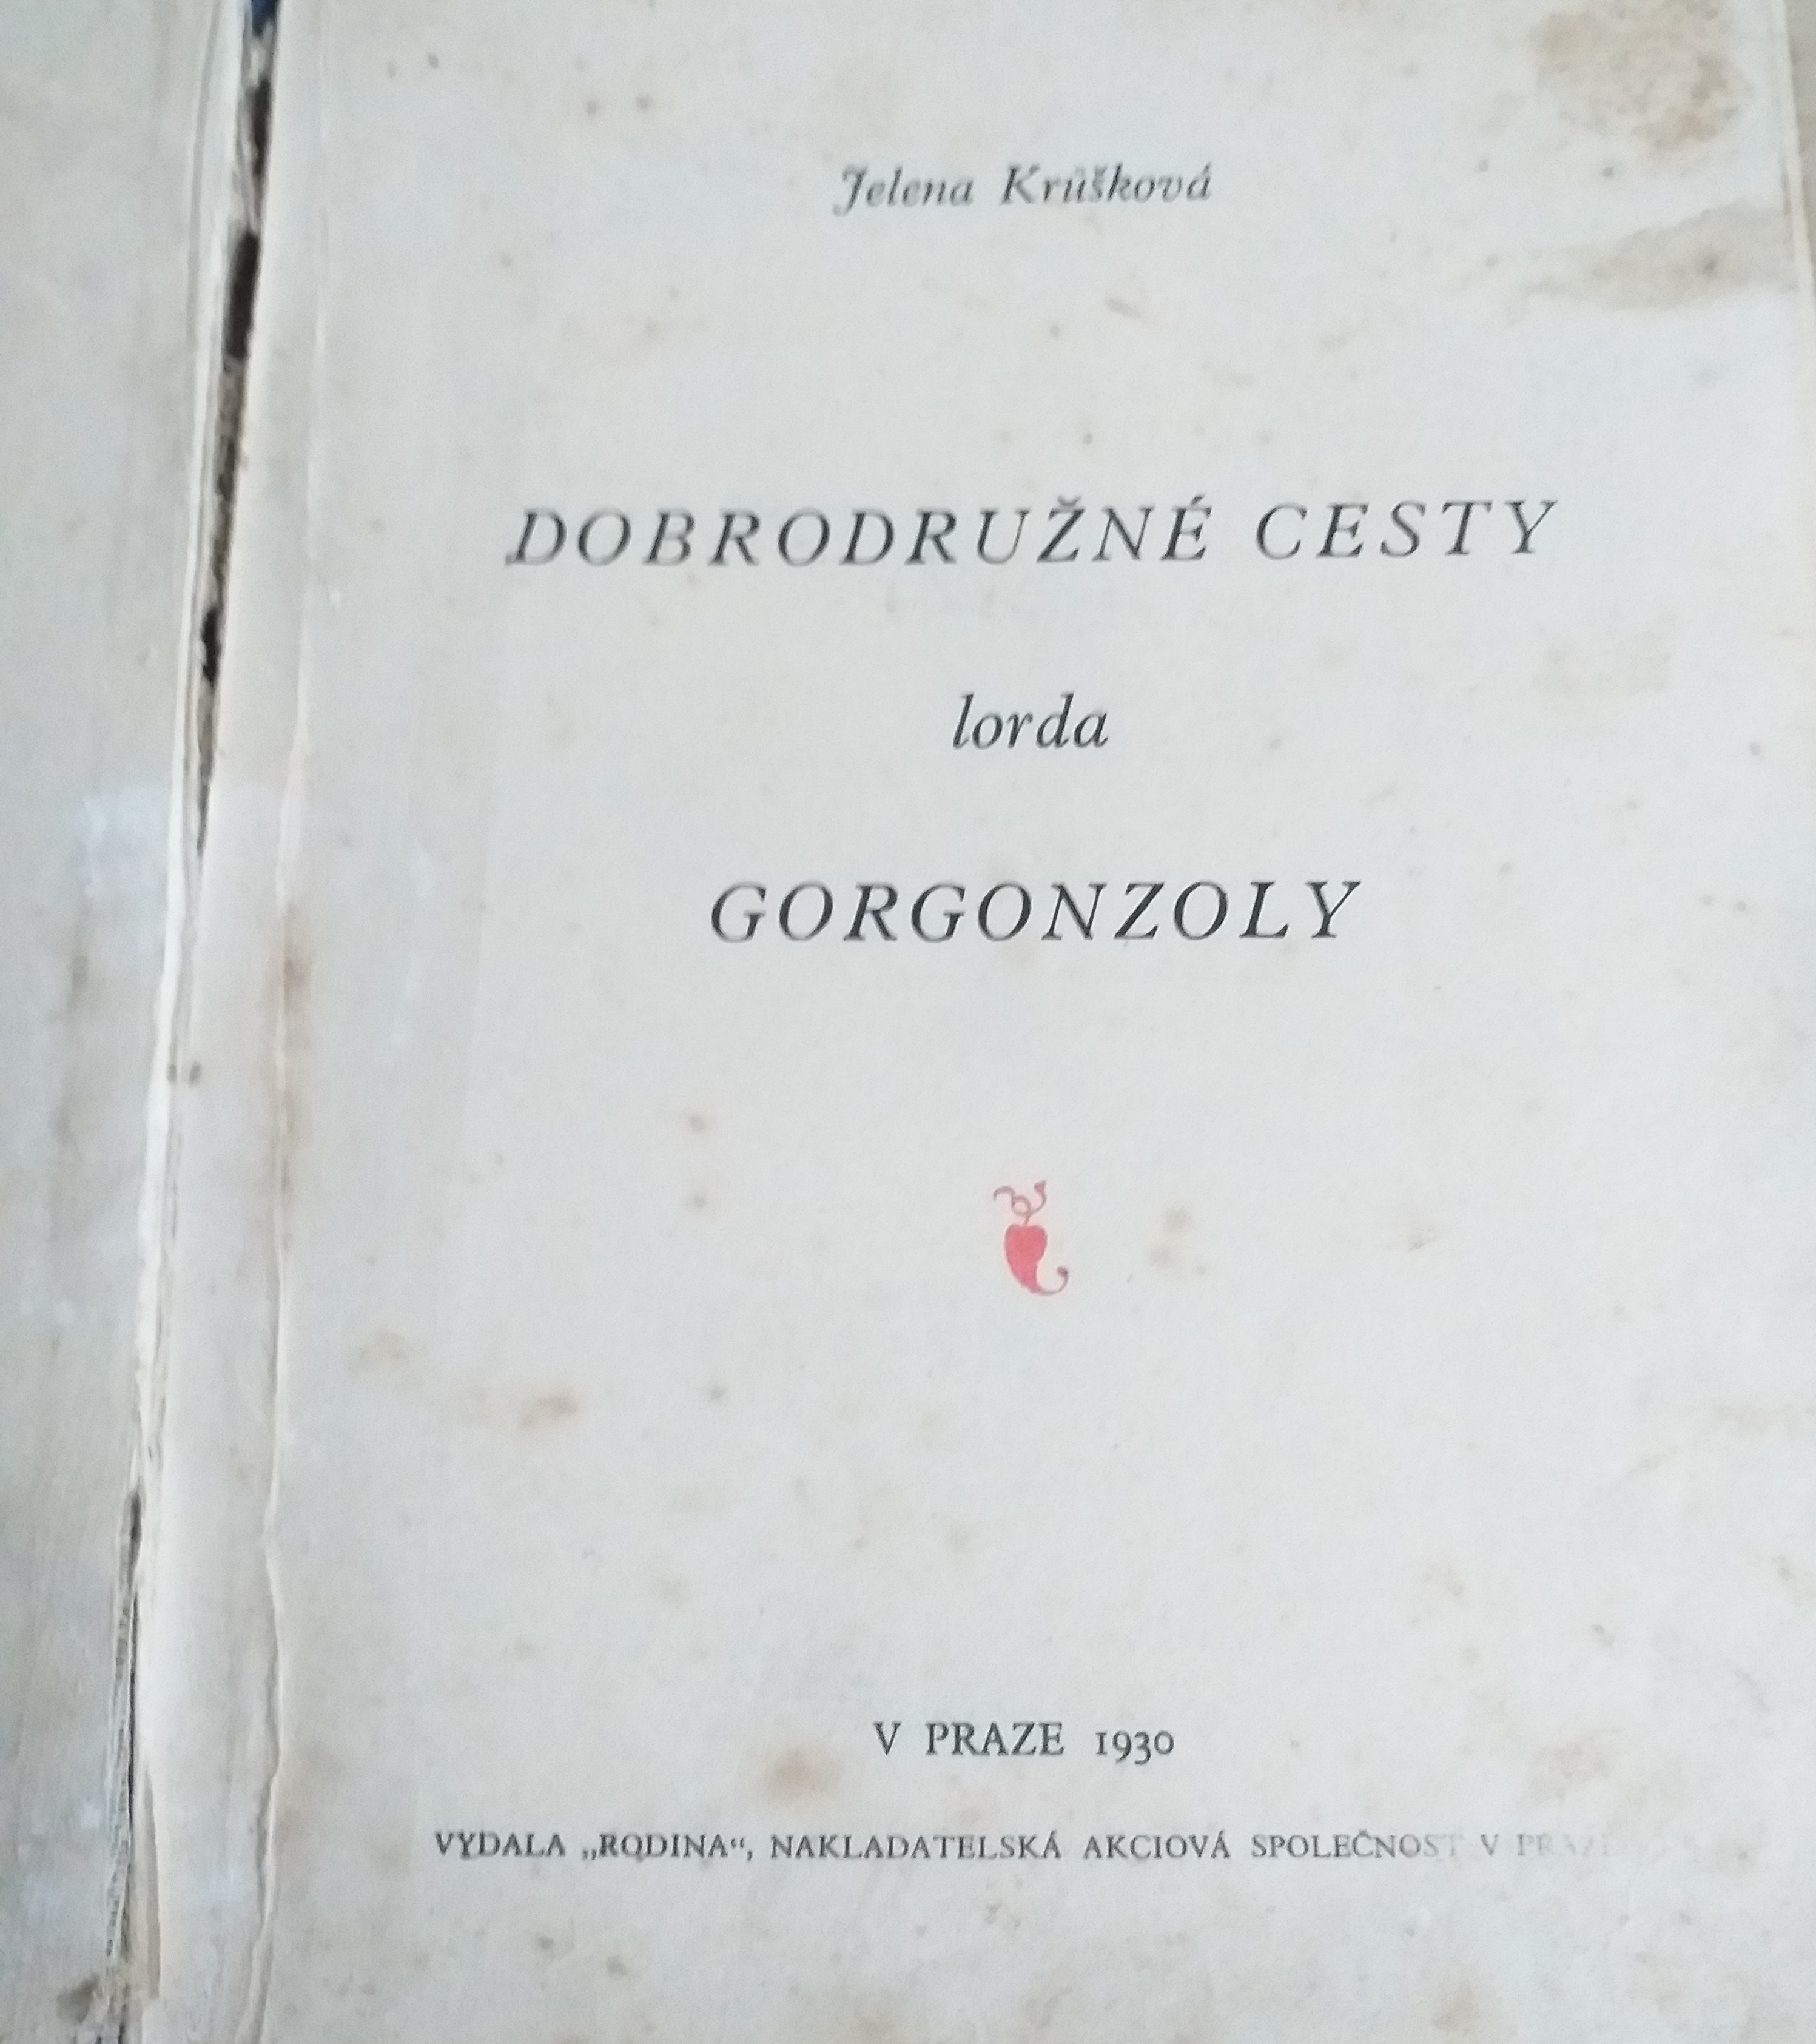 Dobrodružství  lorda   Gorgonzoly - Knihy